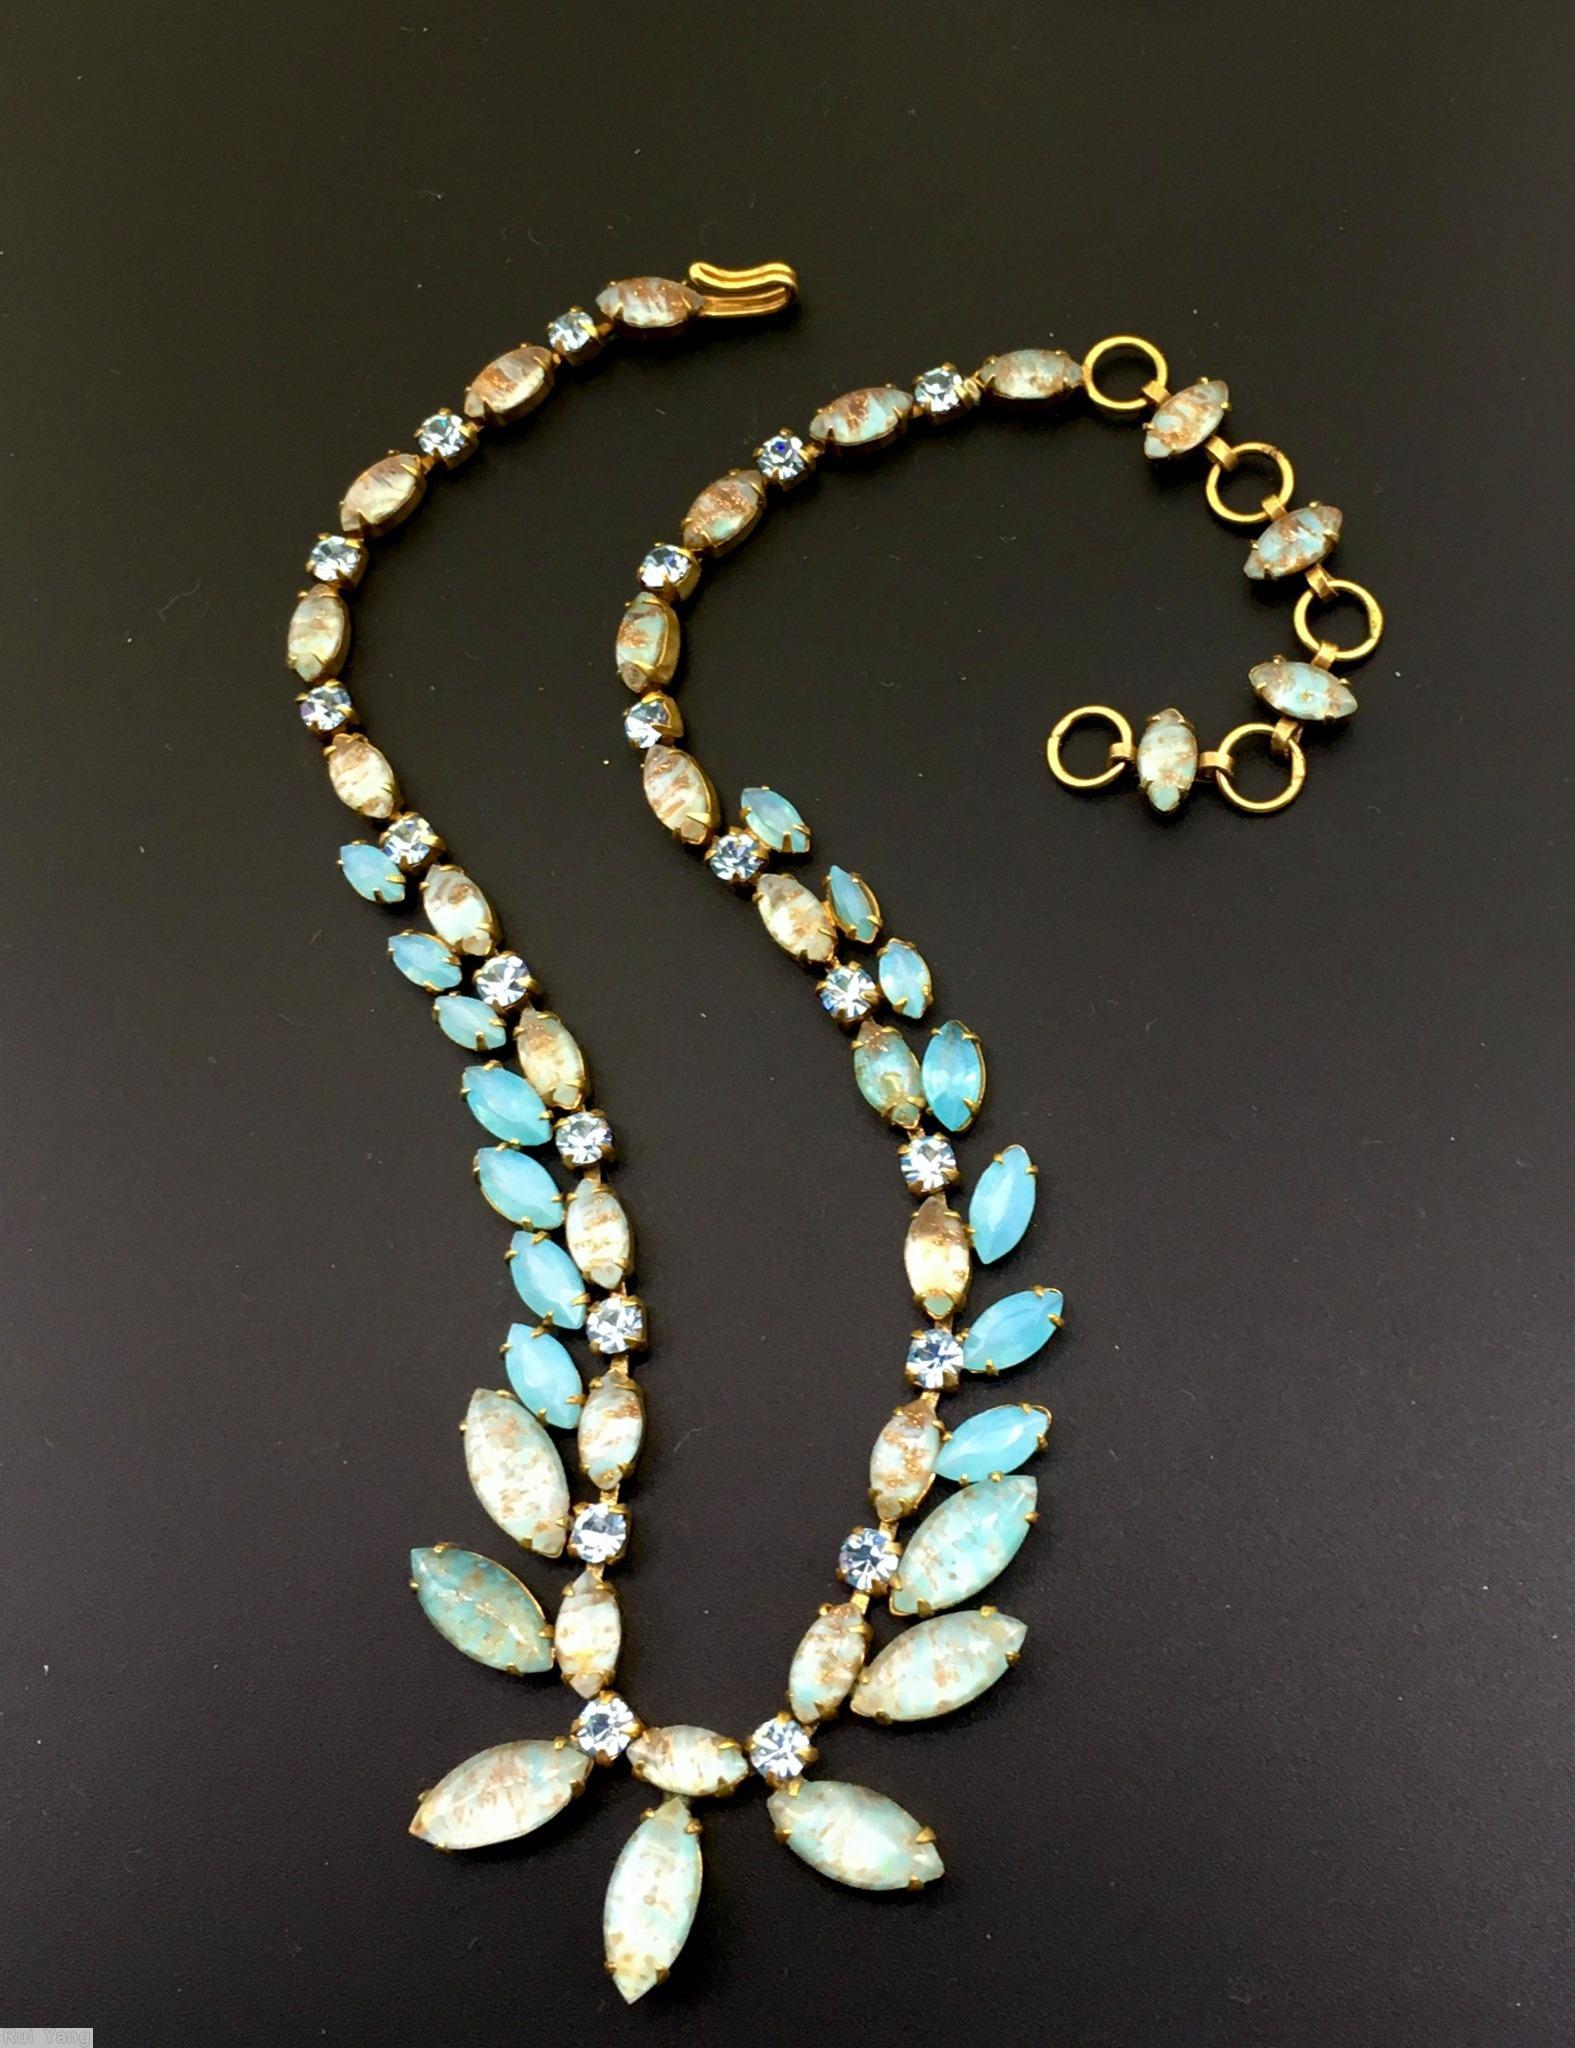 Schreiner single chain radial navette necklace 41 stone chain 21 varied size navette aqua venetian aqua goldtone jewelry